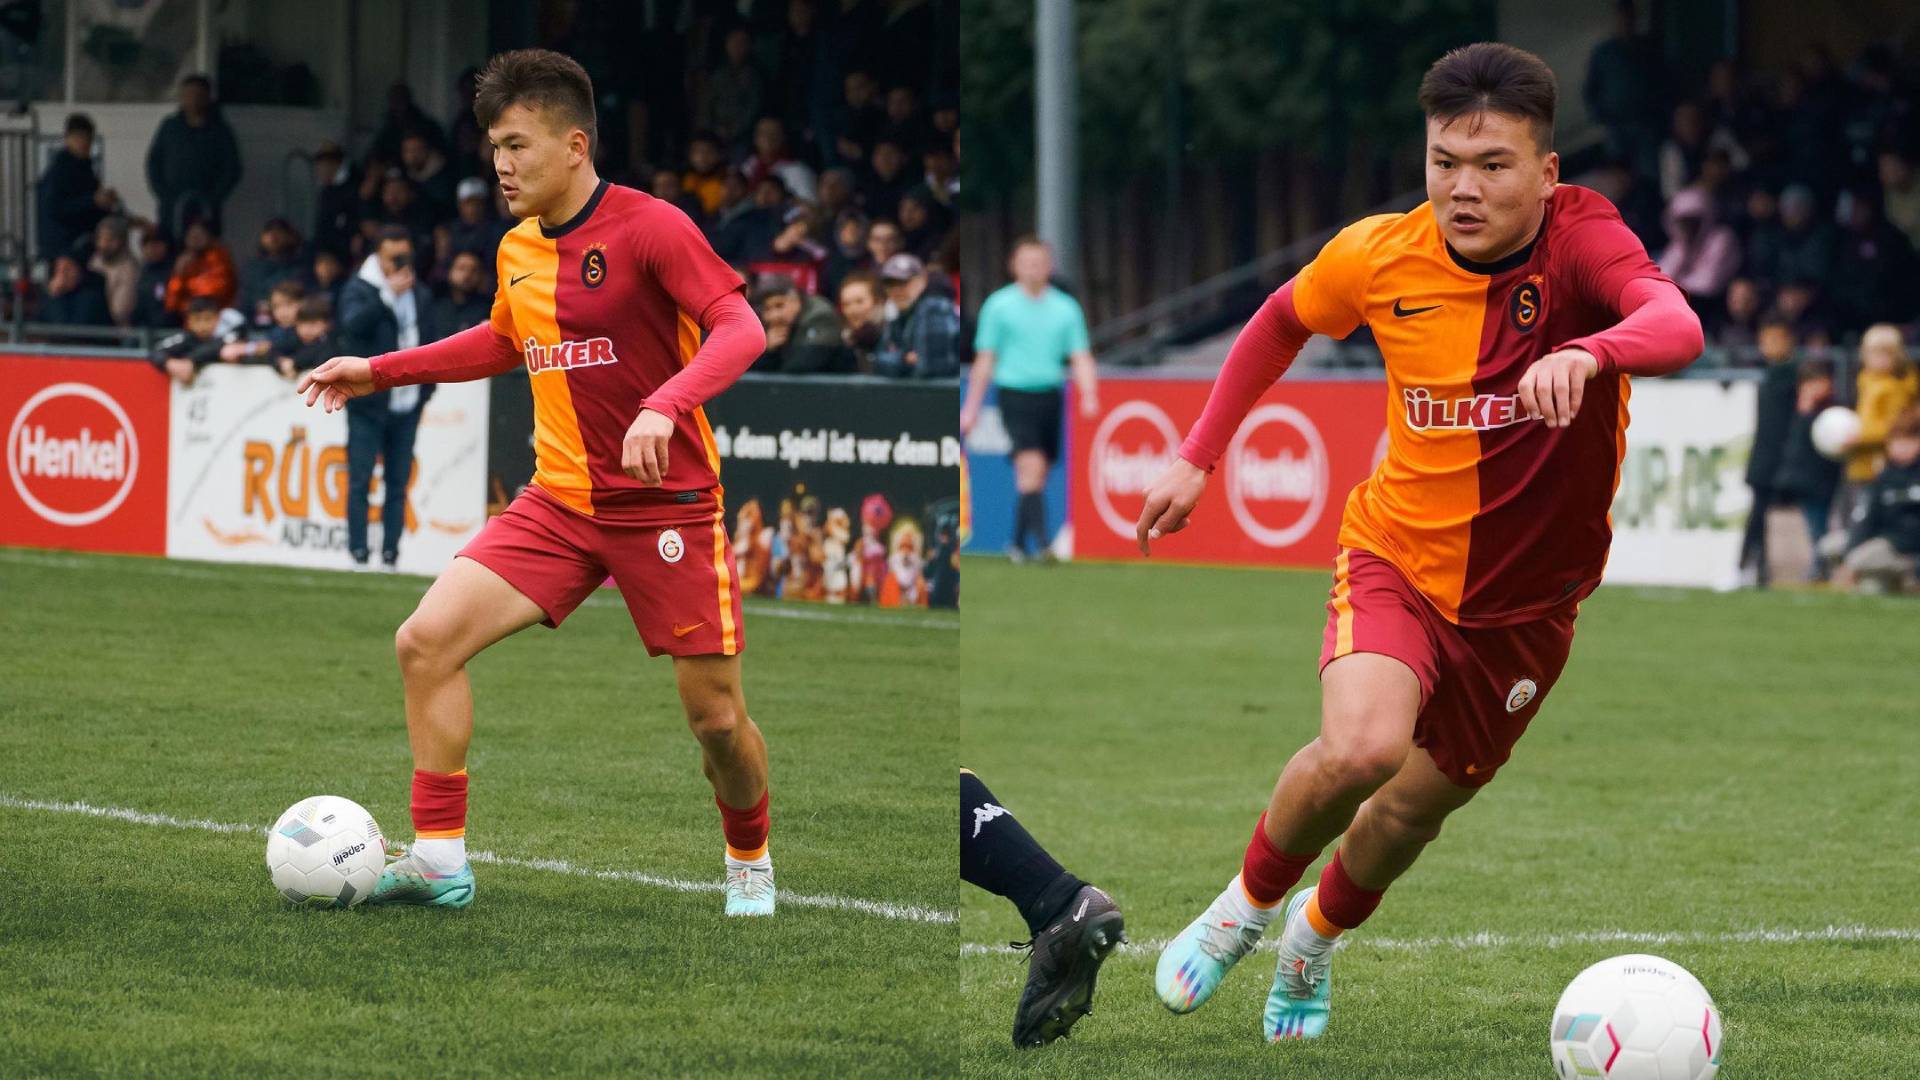 Bintang Galatasaray Jadi Pemain Termuda Di Piala Asia